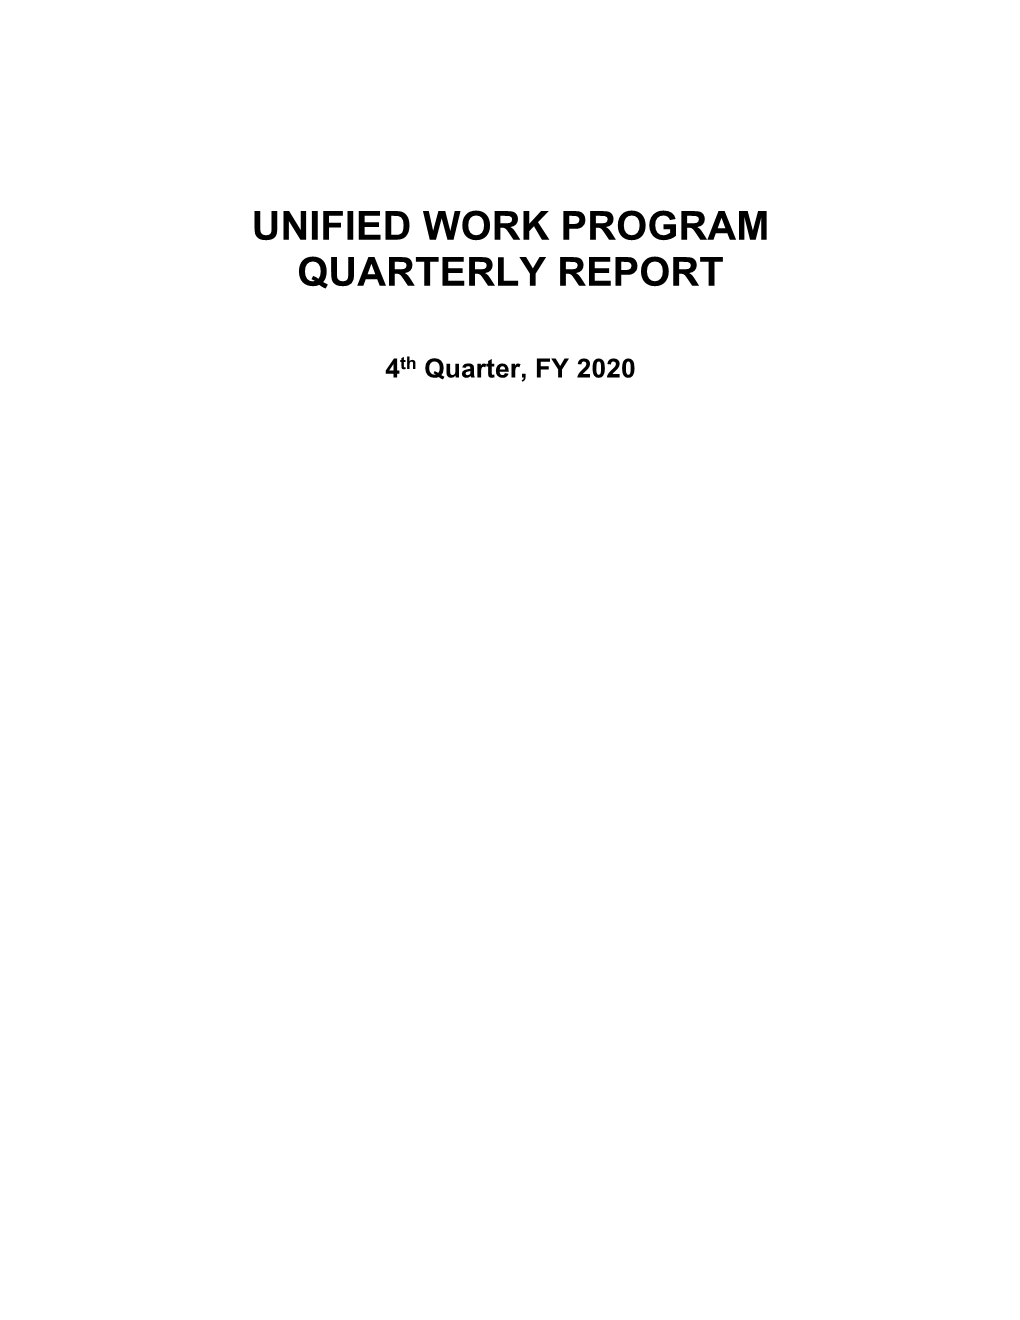 Unified Work Program Quarterly Report